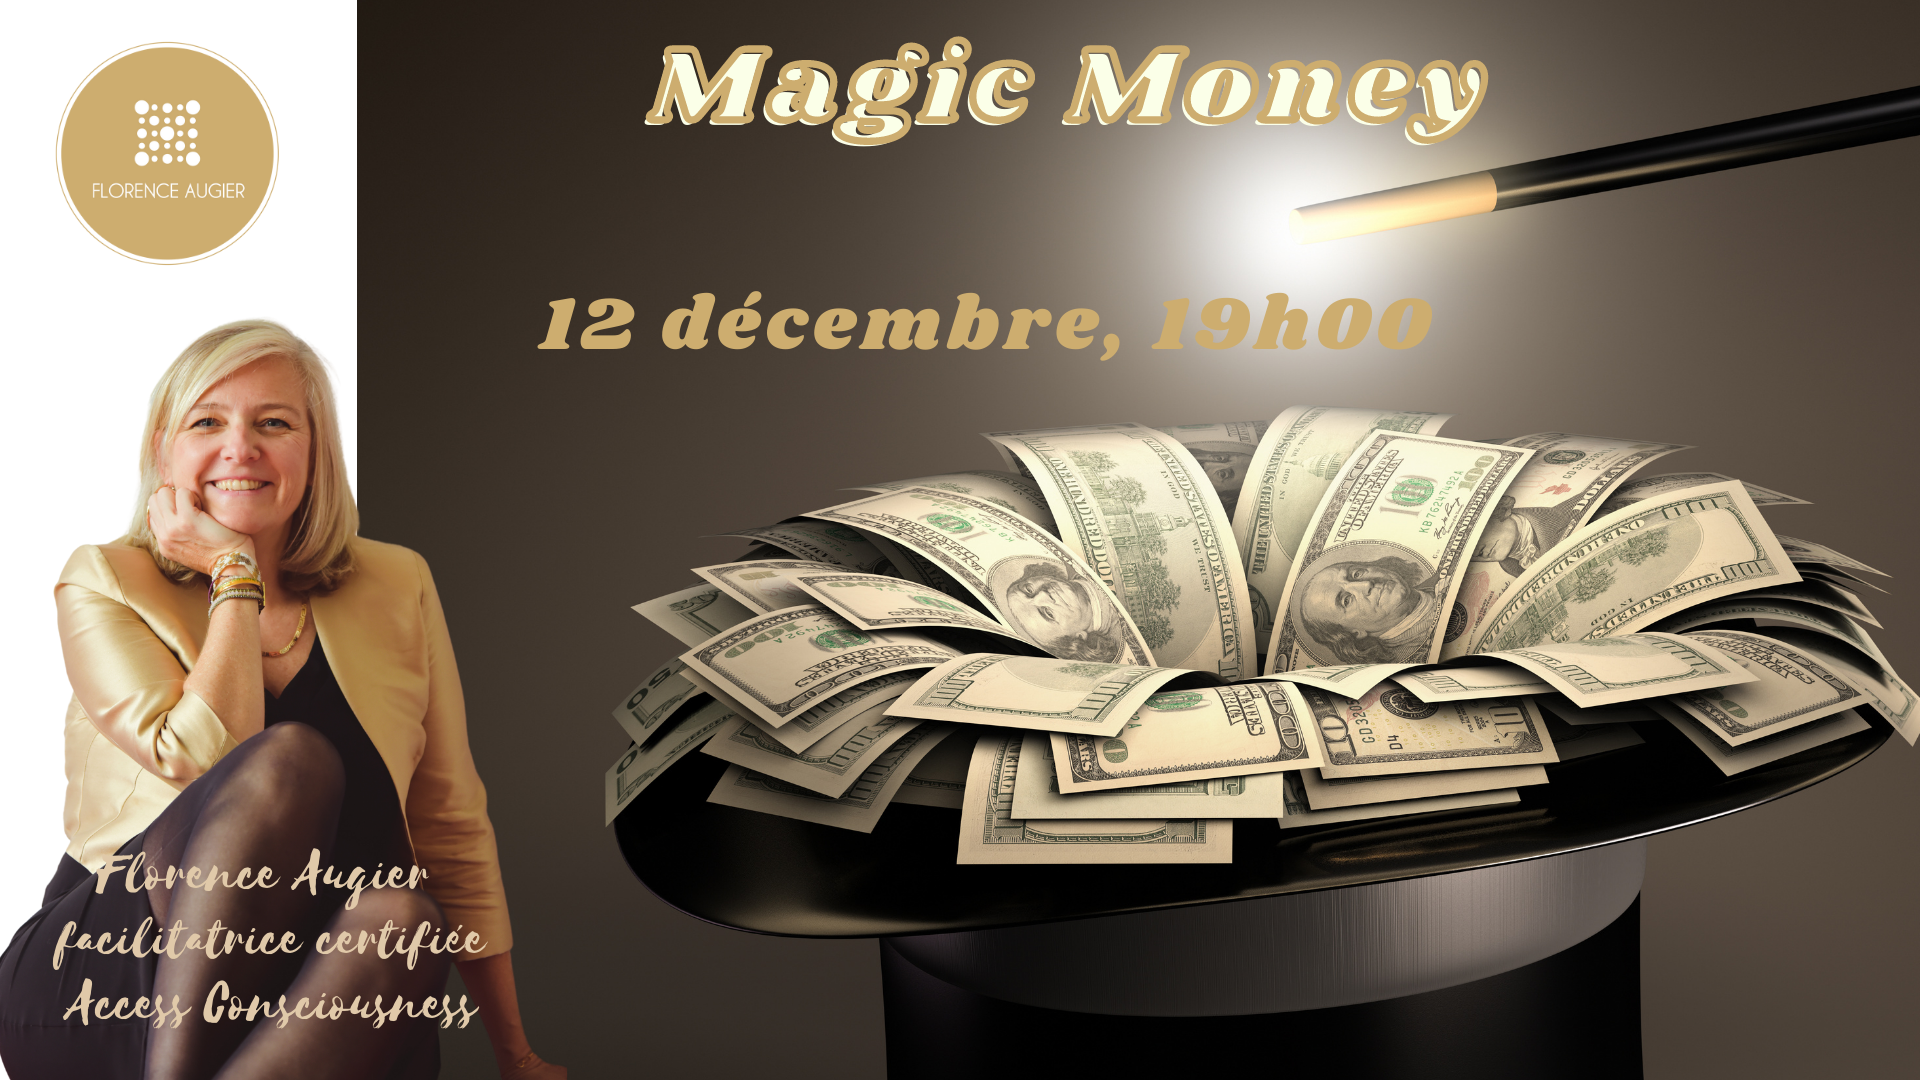 Magic money